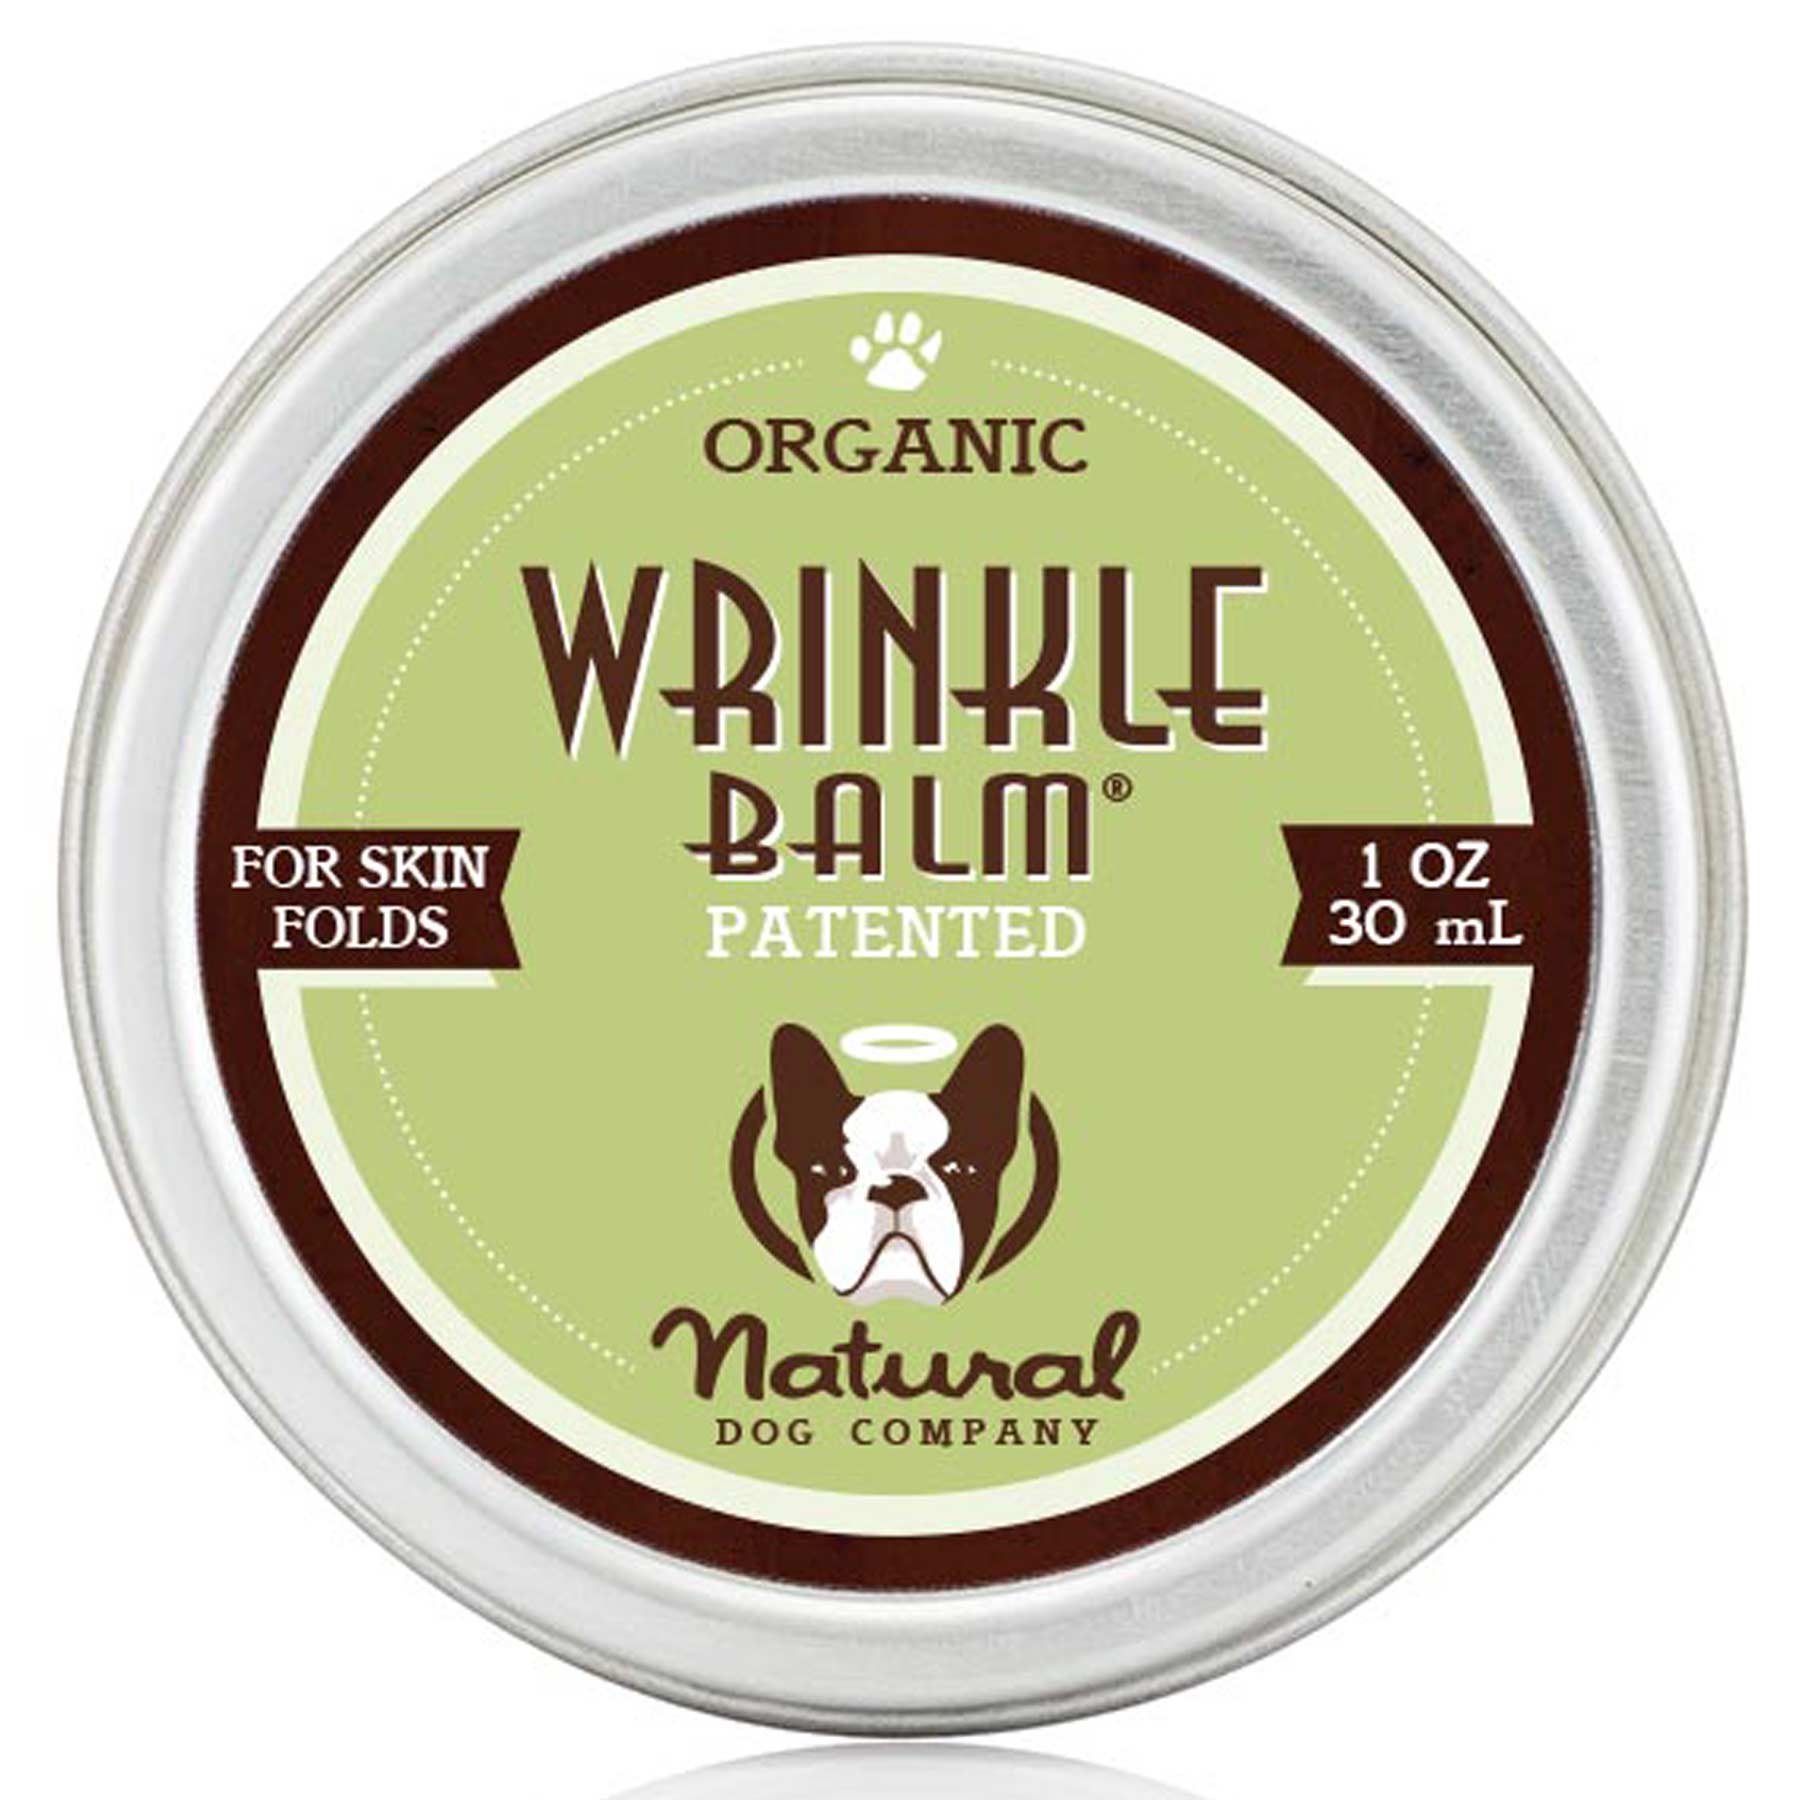 Natural Dog Company Wrinkle Balm Organic Healing Balm